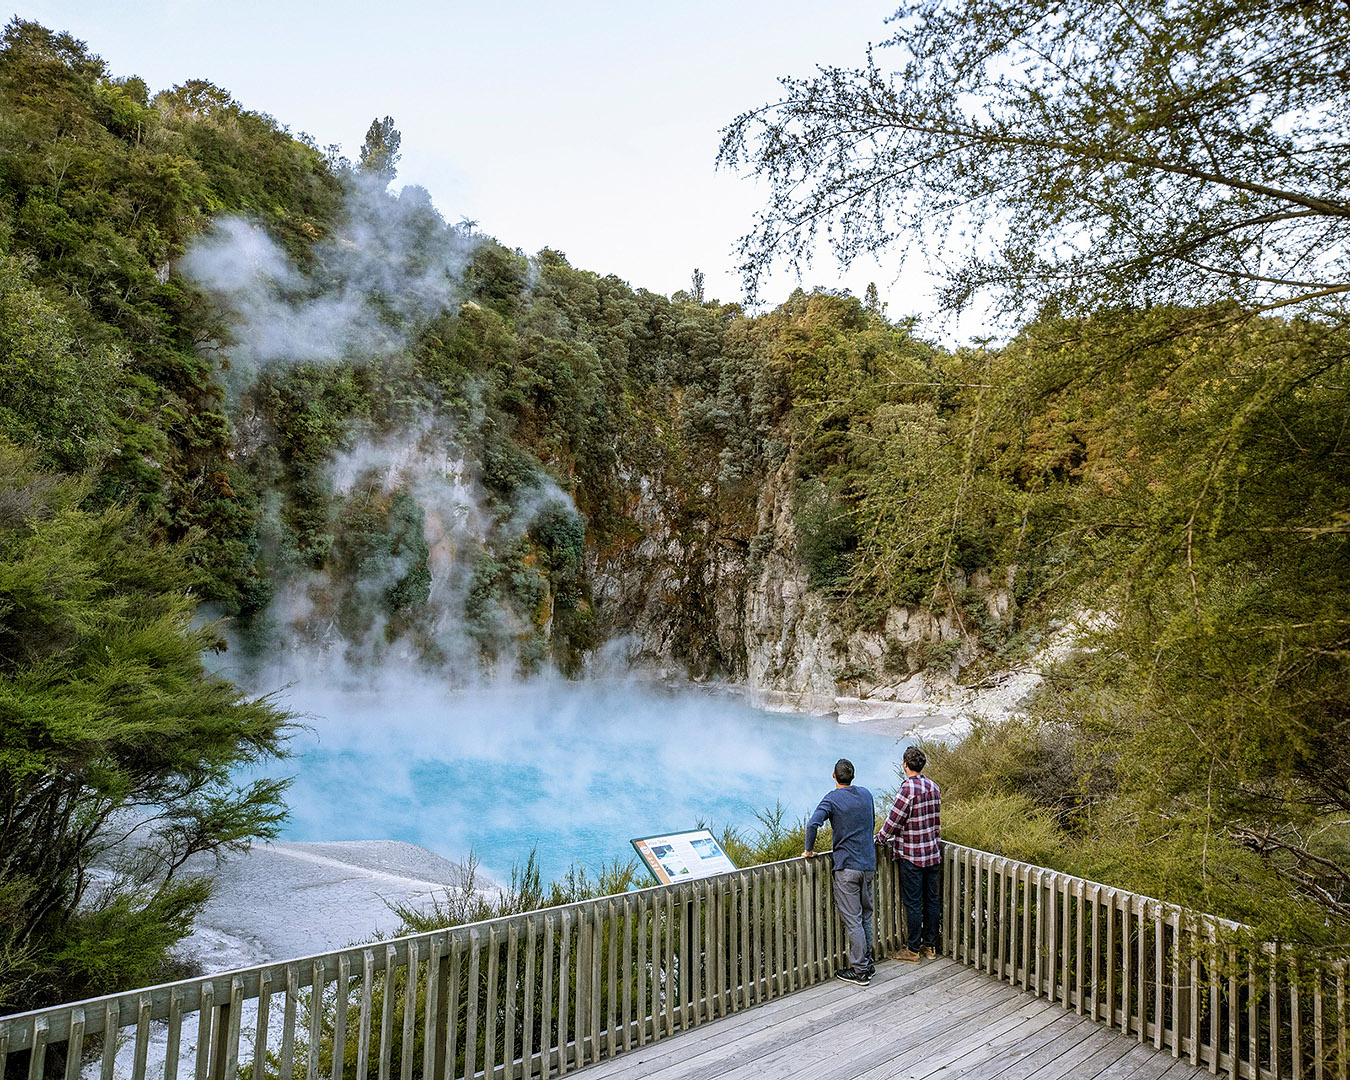 Two people admire the scene at Waimangu Volcanic Valley in Rotorua